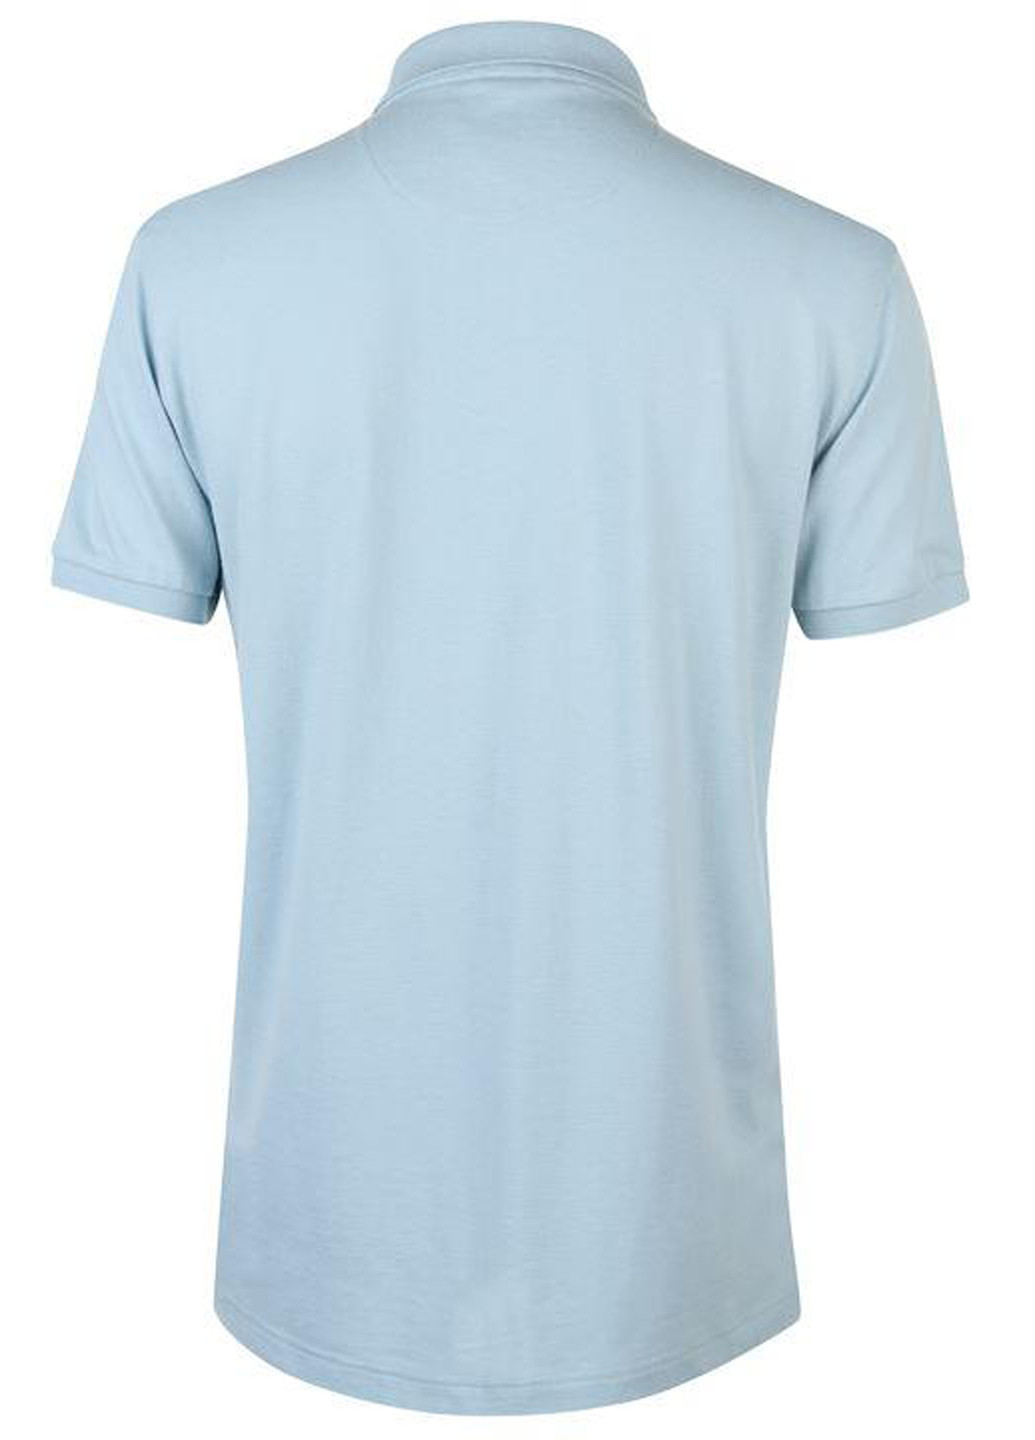 Светло-голубой футболка-поло для мужчин Kangol однотонная